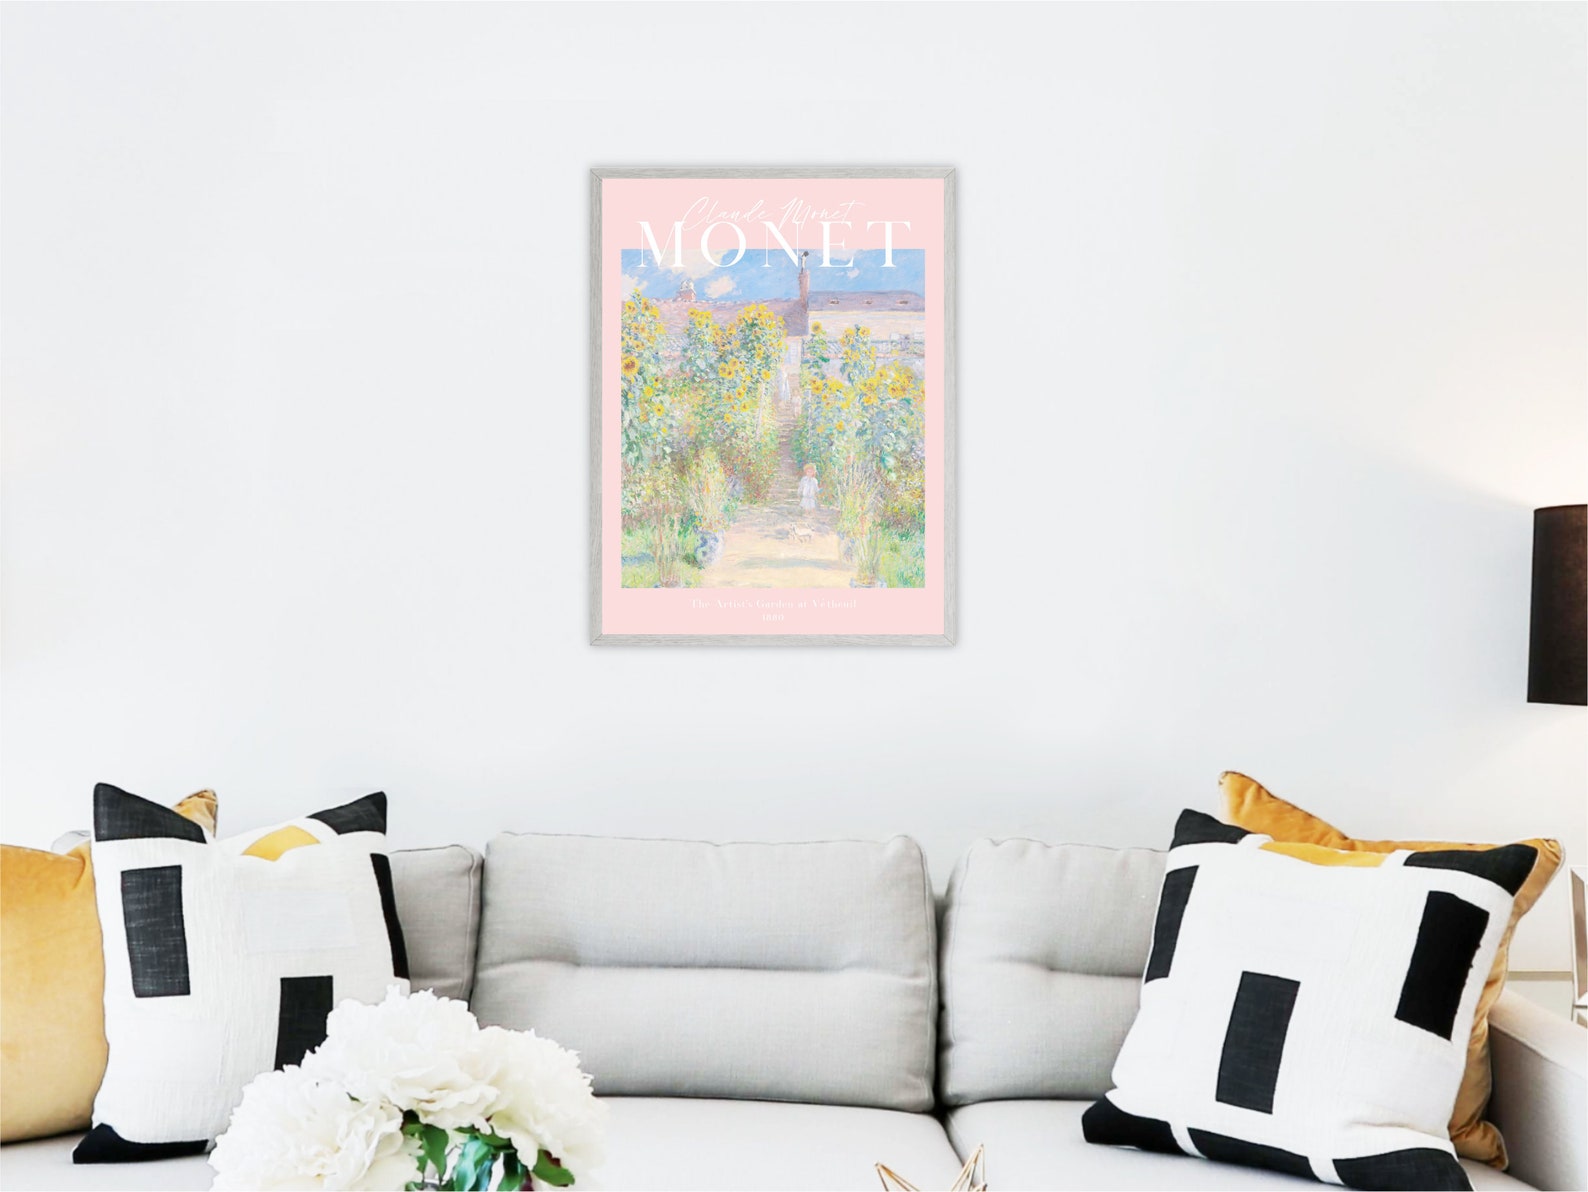 Monet Print Download Pastel Pink Monet Poster Classic - Etsy